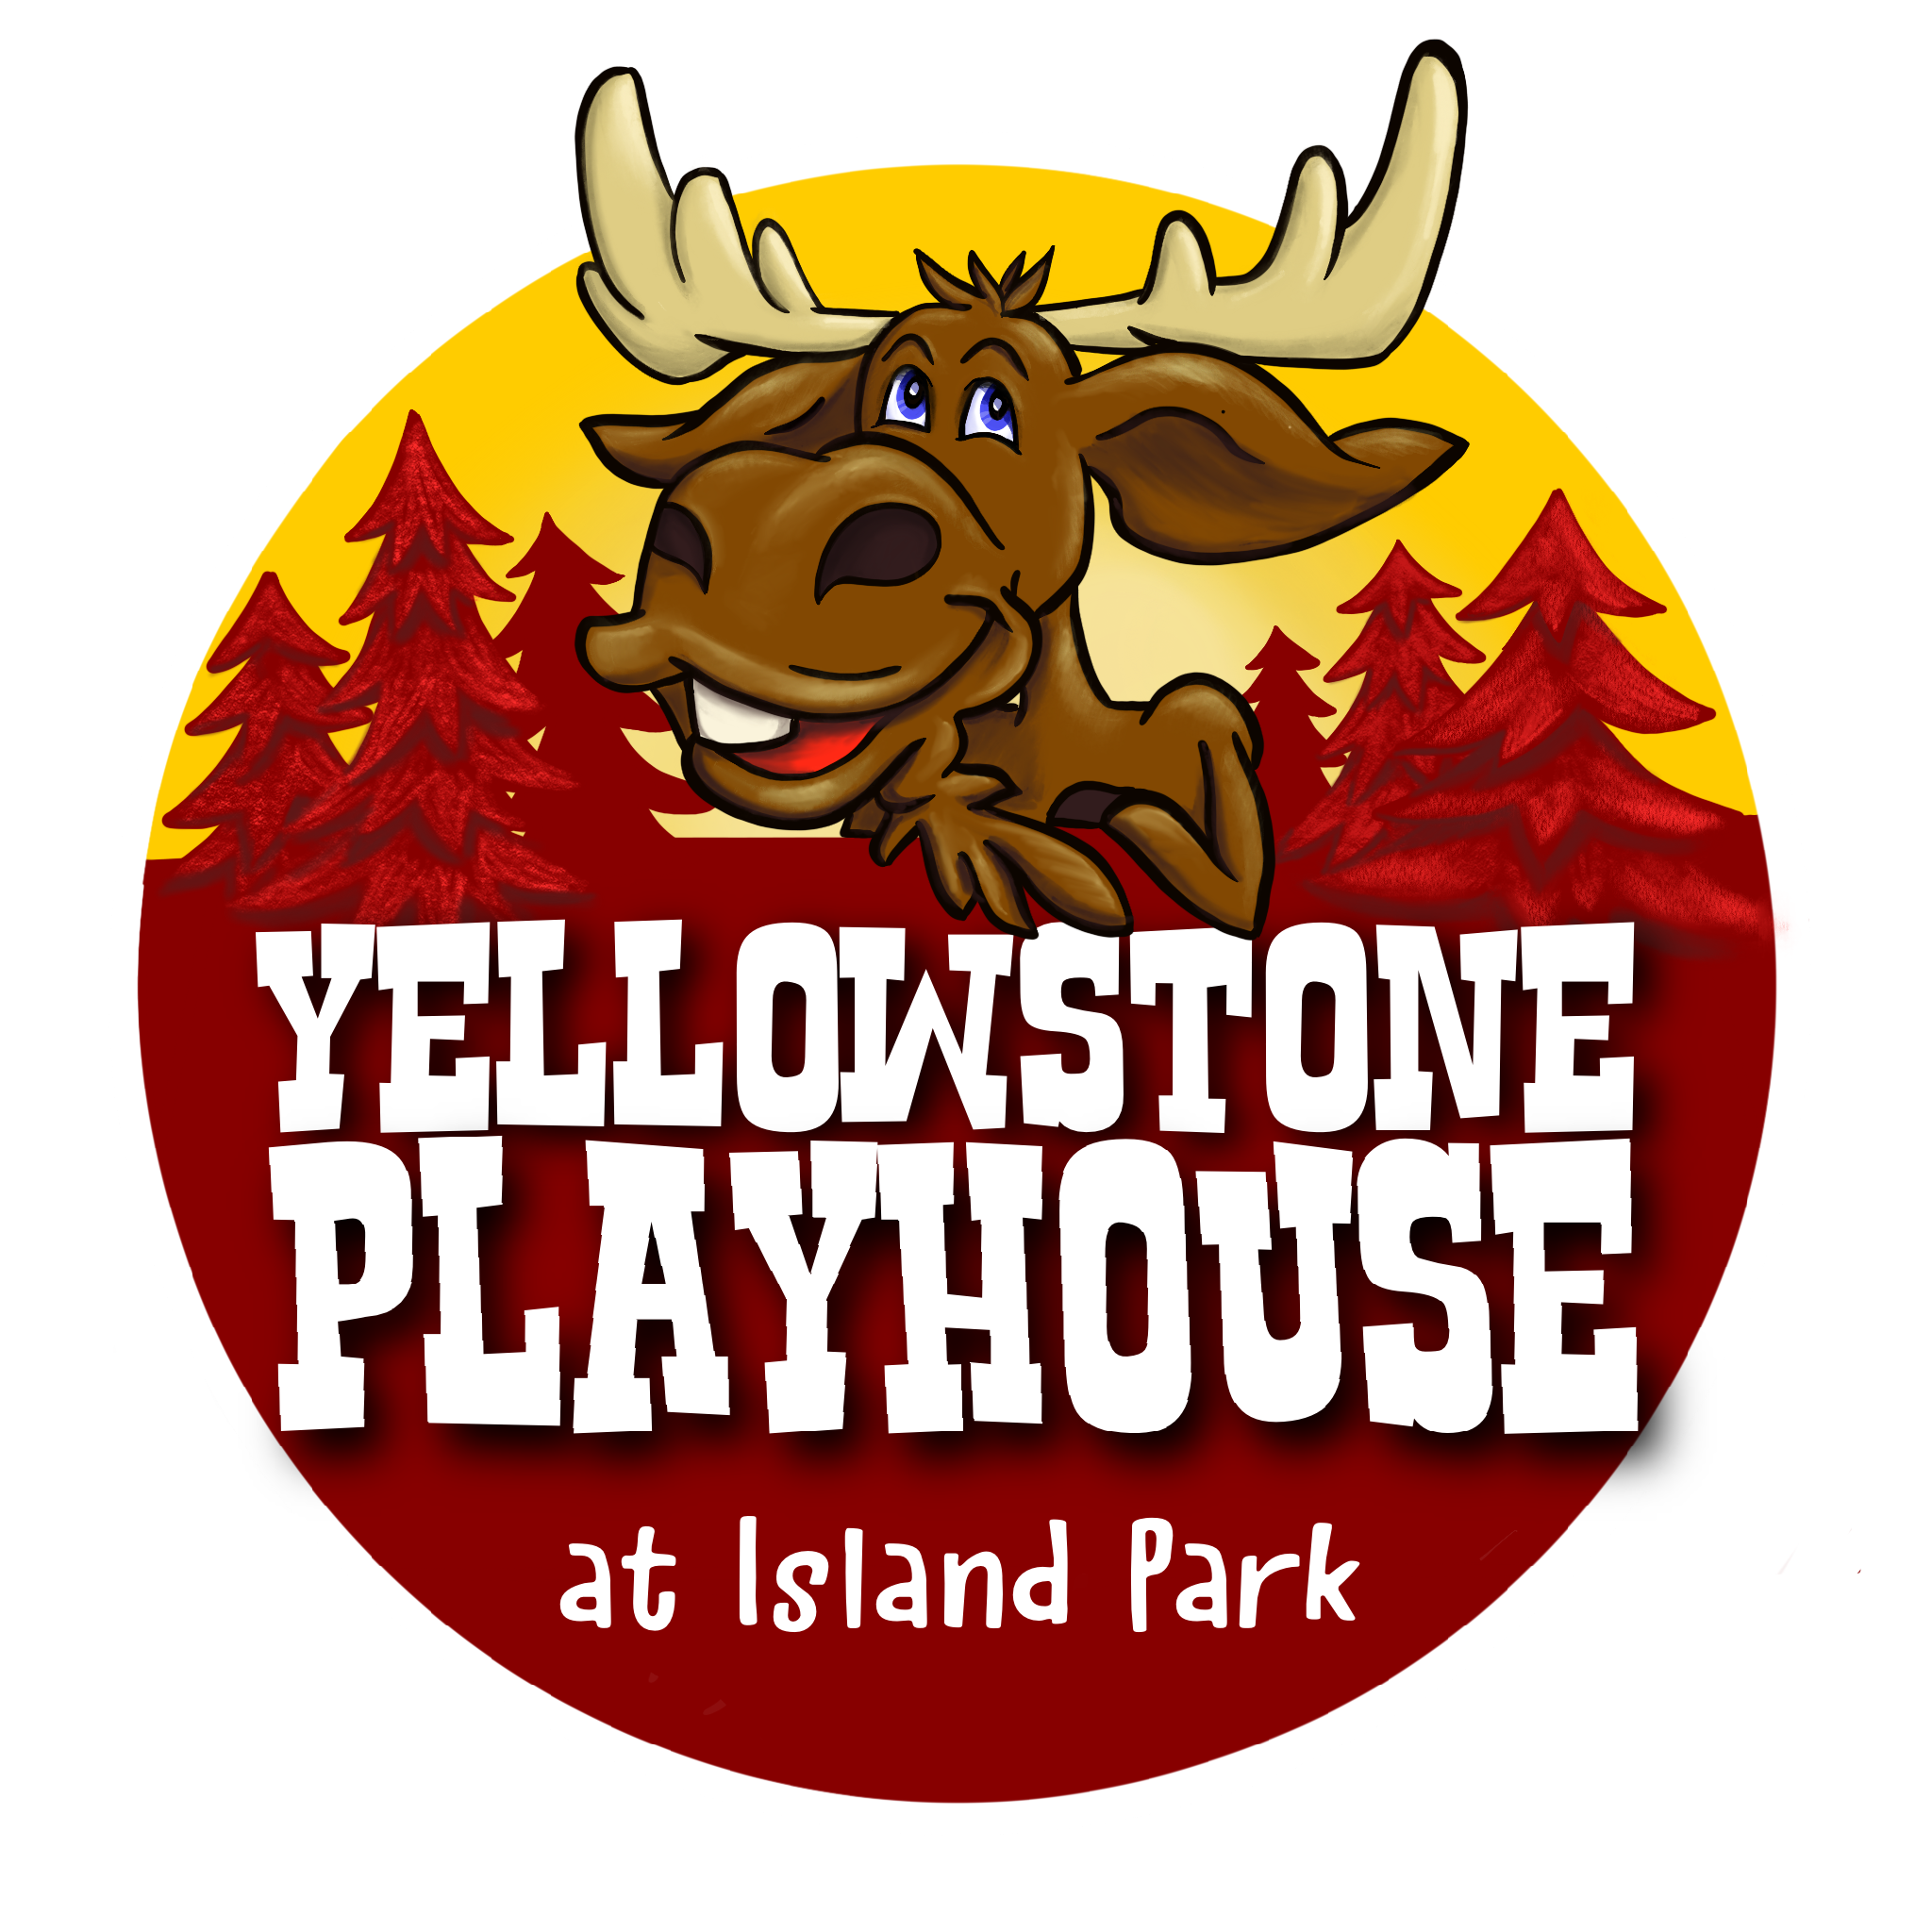 Yellowstone Playhouse at Island Park